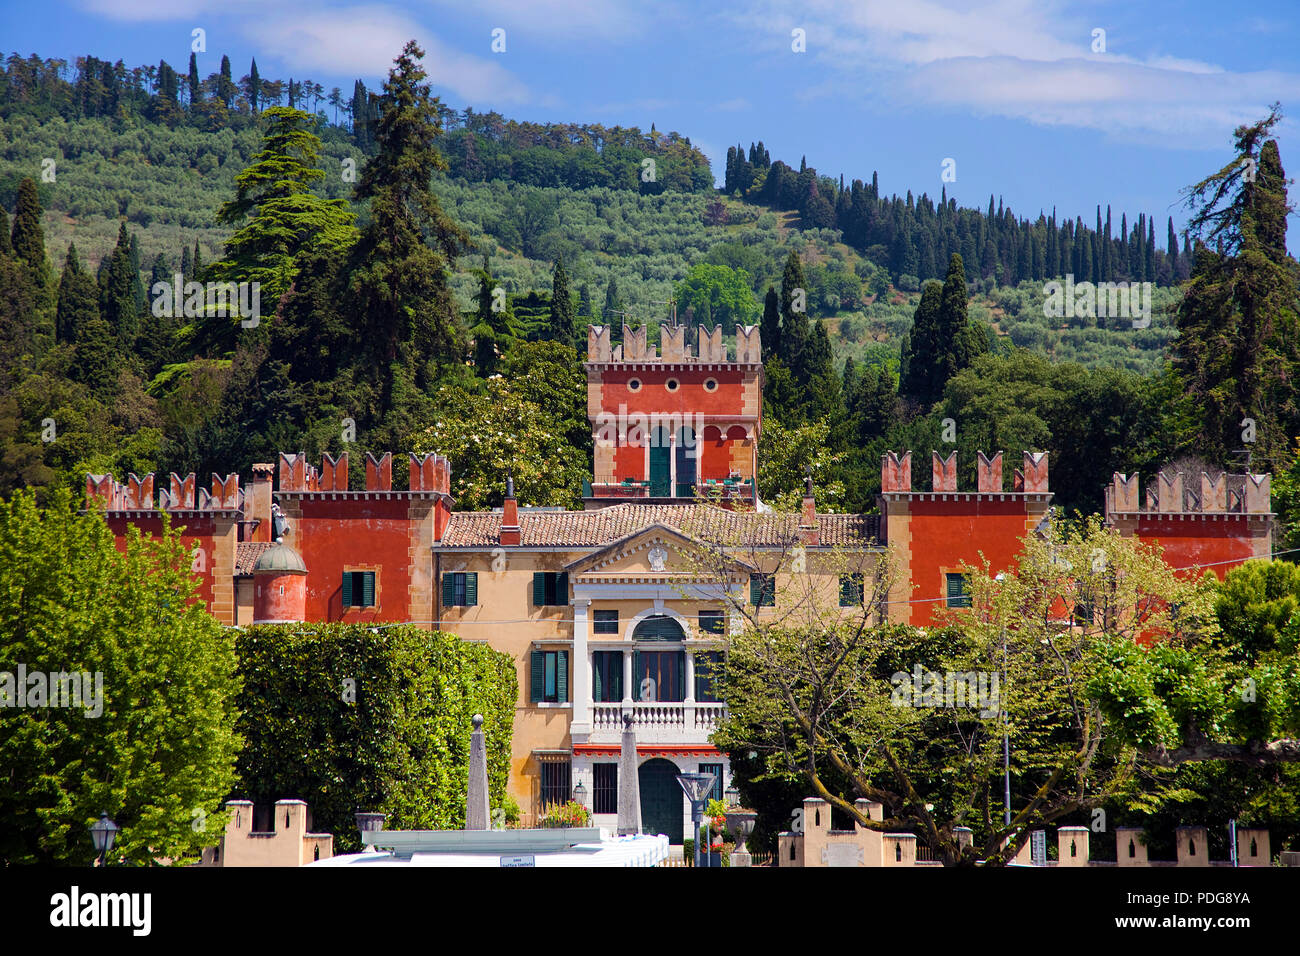 Villa Albertini, palace of the 16. century, neo-classical architecture, Garda, province Verona, Lake Garda, Italy Stock Photo